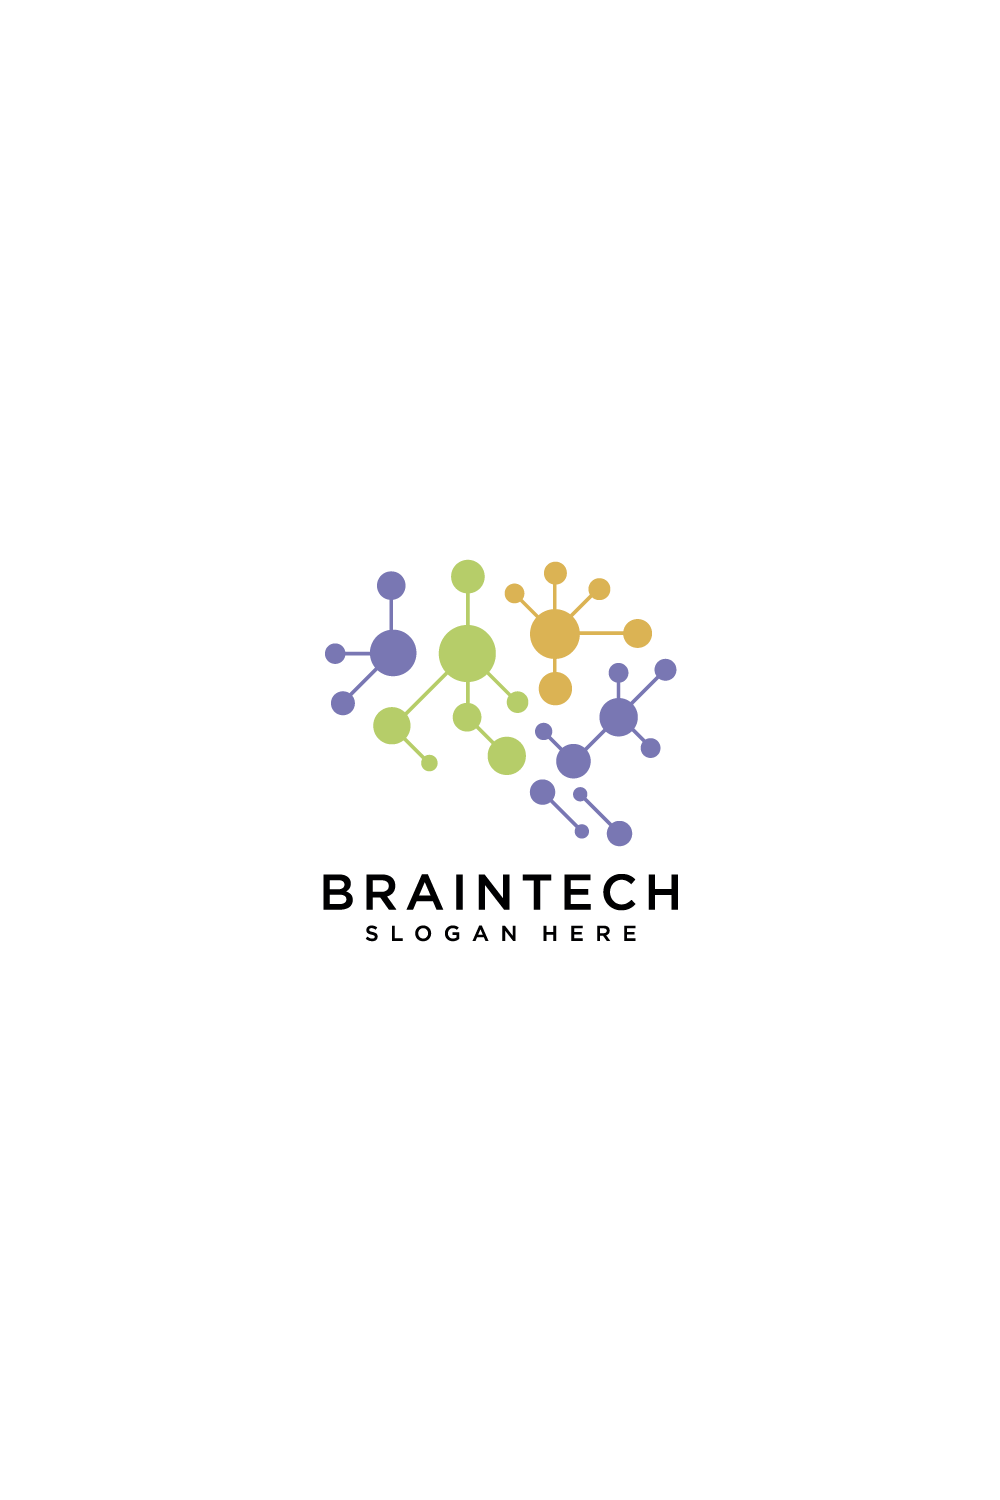 Brain technology logo design template pinterest preview image.